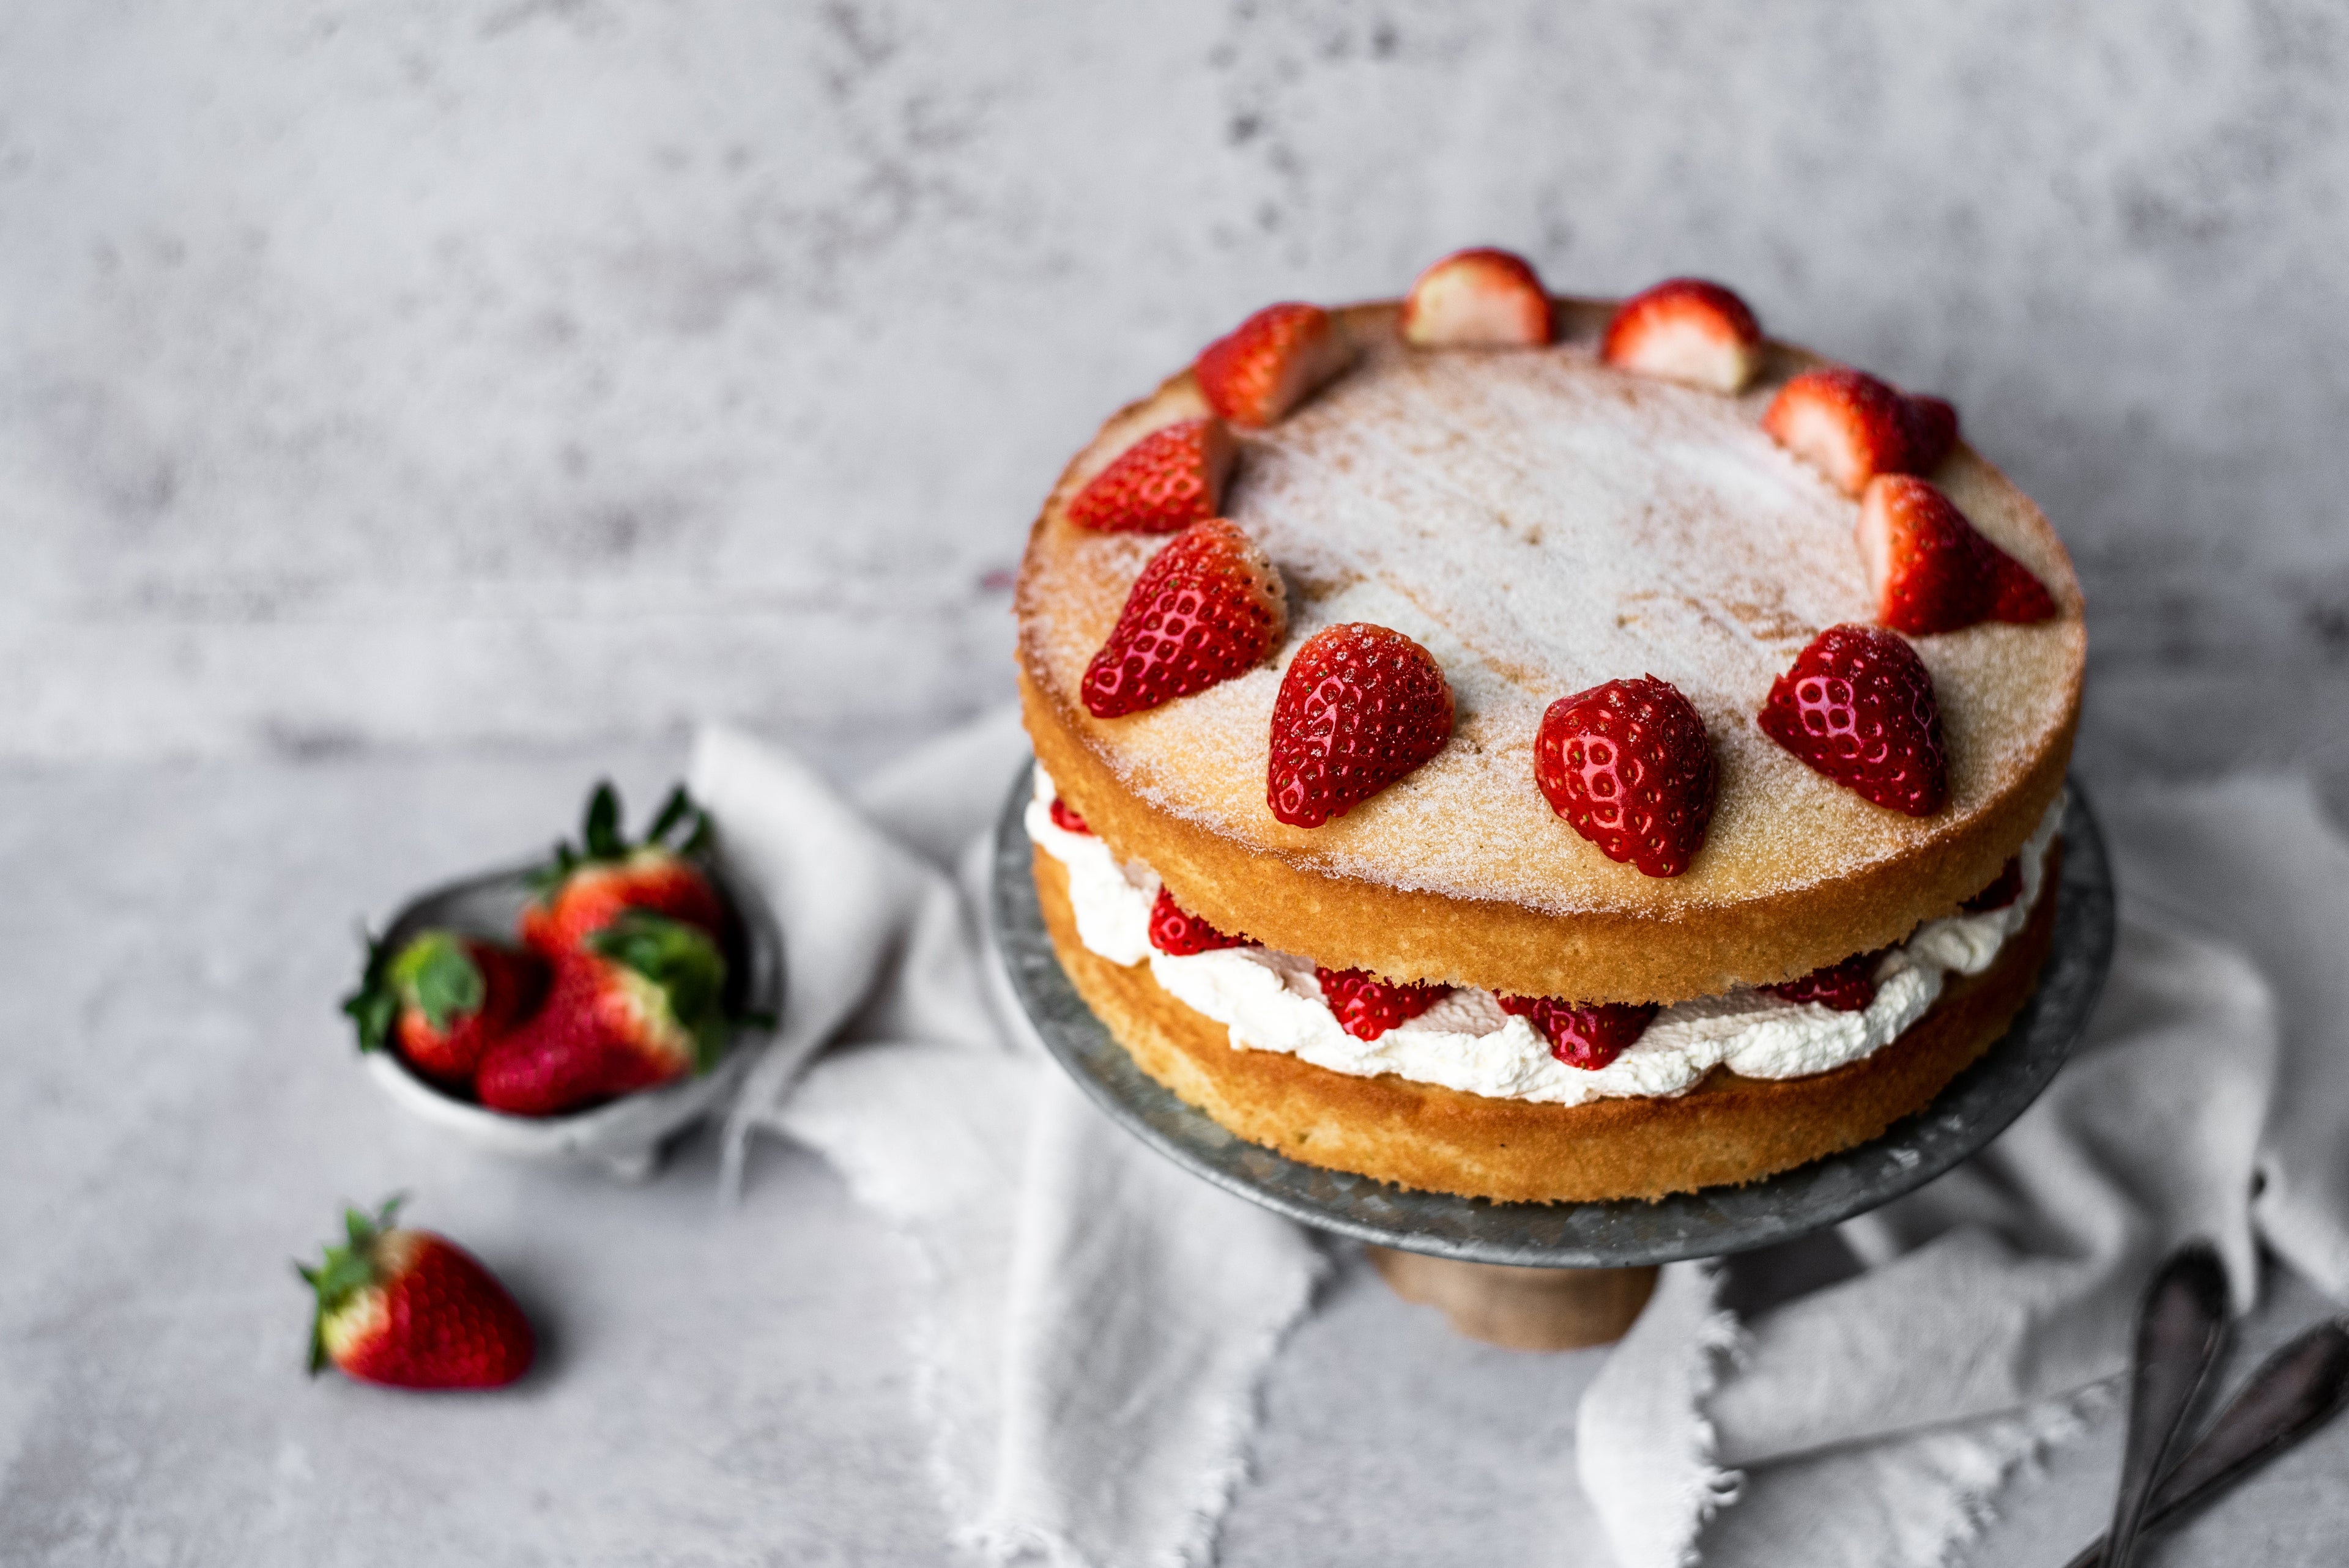 strawberries on top of a sponge cake